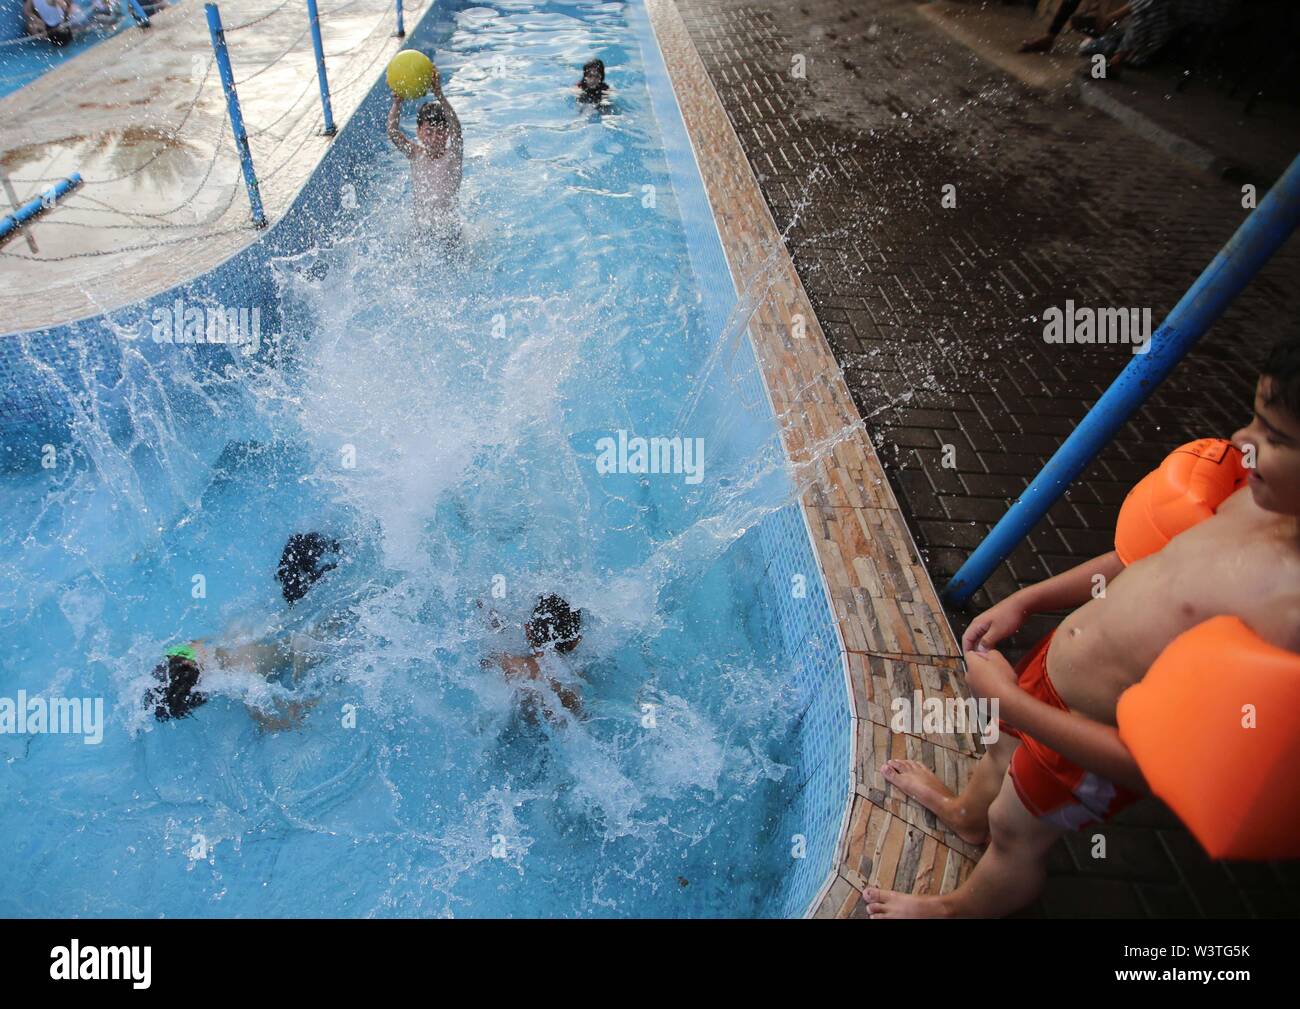 Gaza City, The Gaza Strip, Palestine. 17th July, 2019. Palestinian children play at a swimming pool on a hot day in the Gaza Strip. Credit: Hassan Jedi/Quds Net News/ZUMA Wire/Alamy Live News Stock Photo